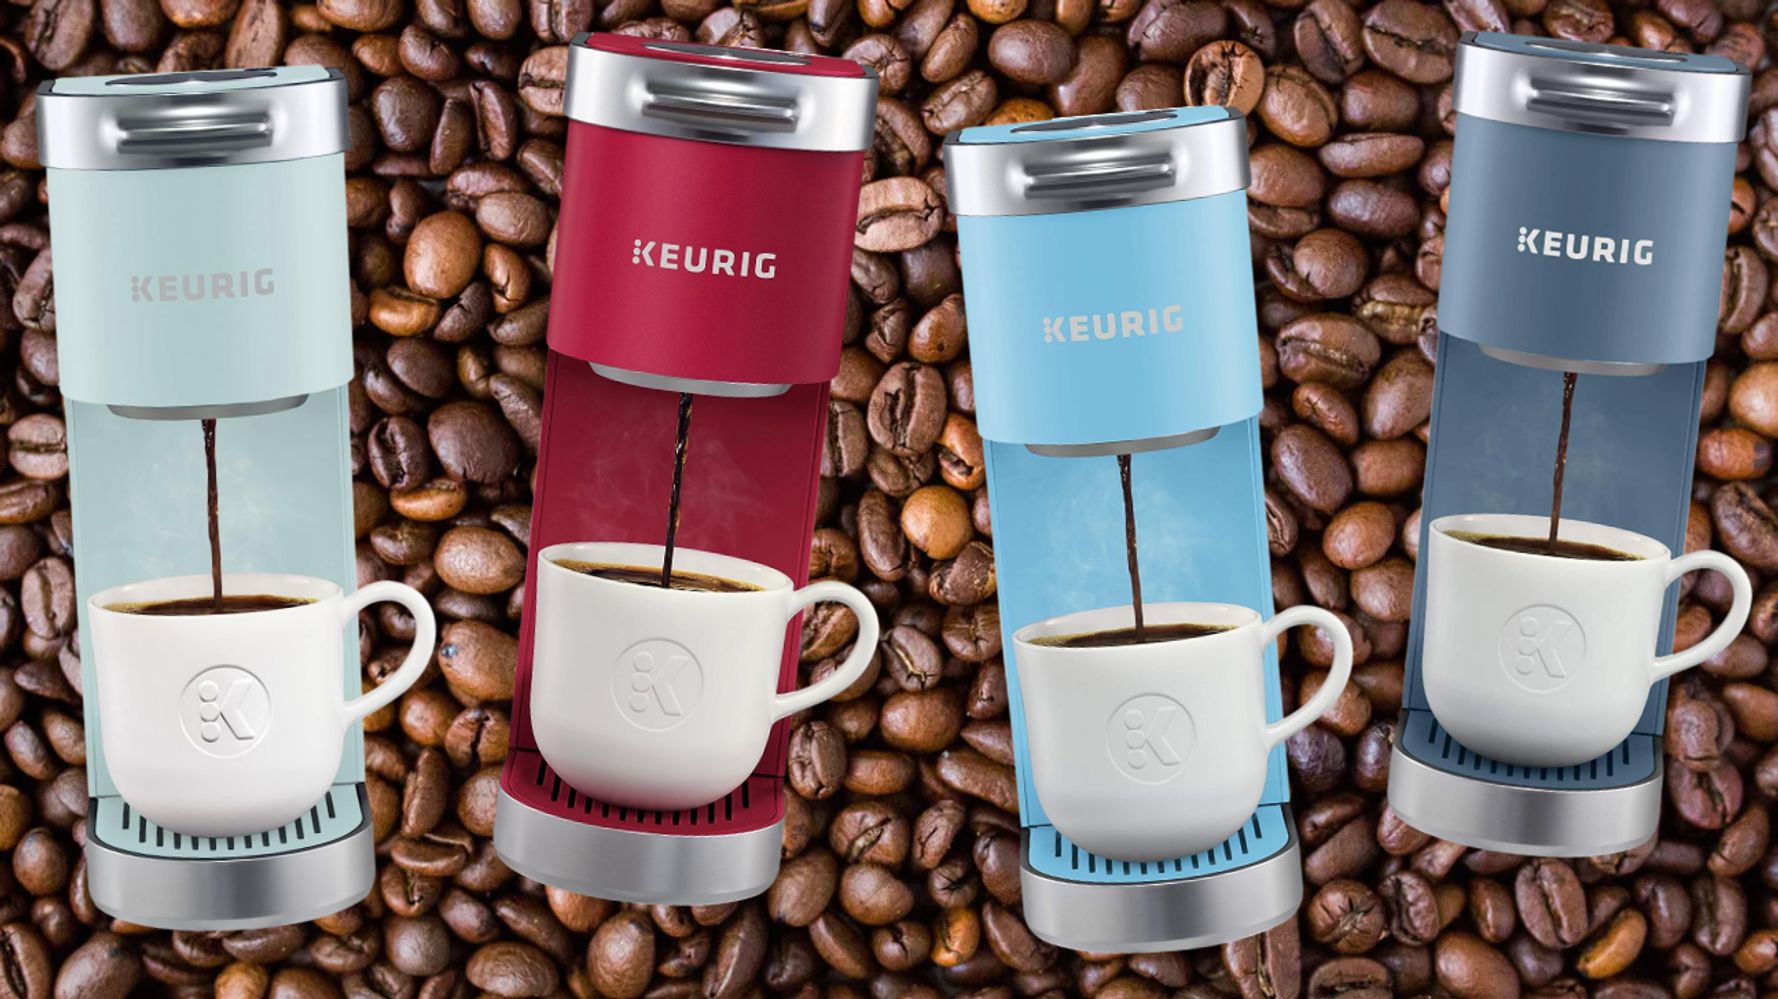 Keurig K-Mini Plus portable coffee maker lets you enjoy truly great coffee  anywhere